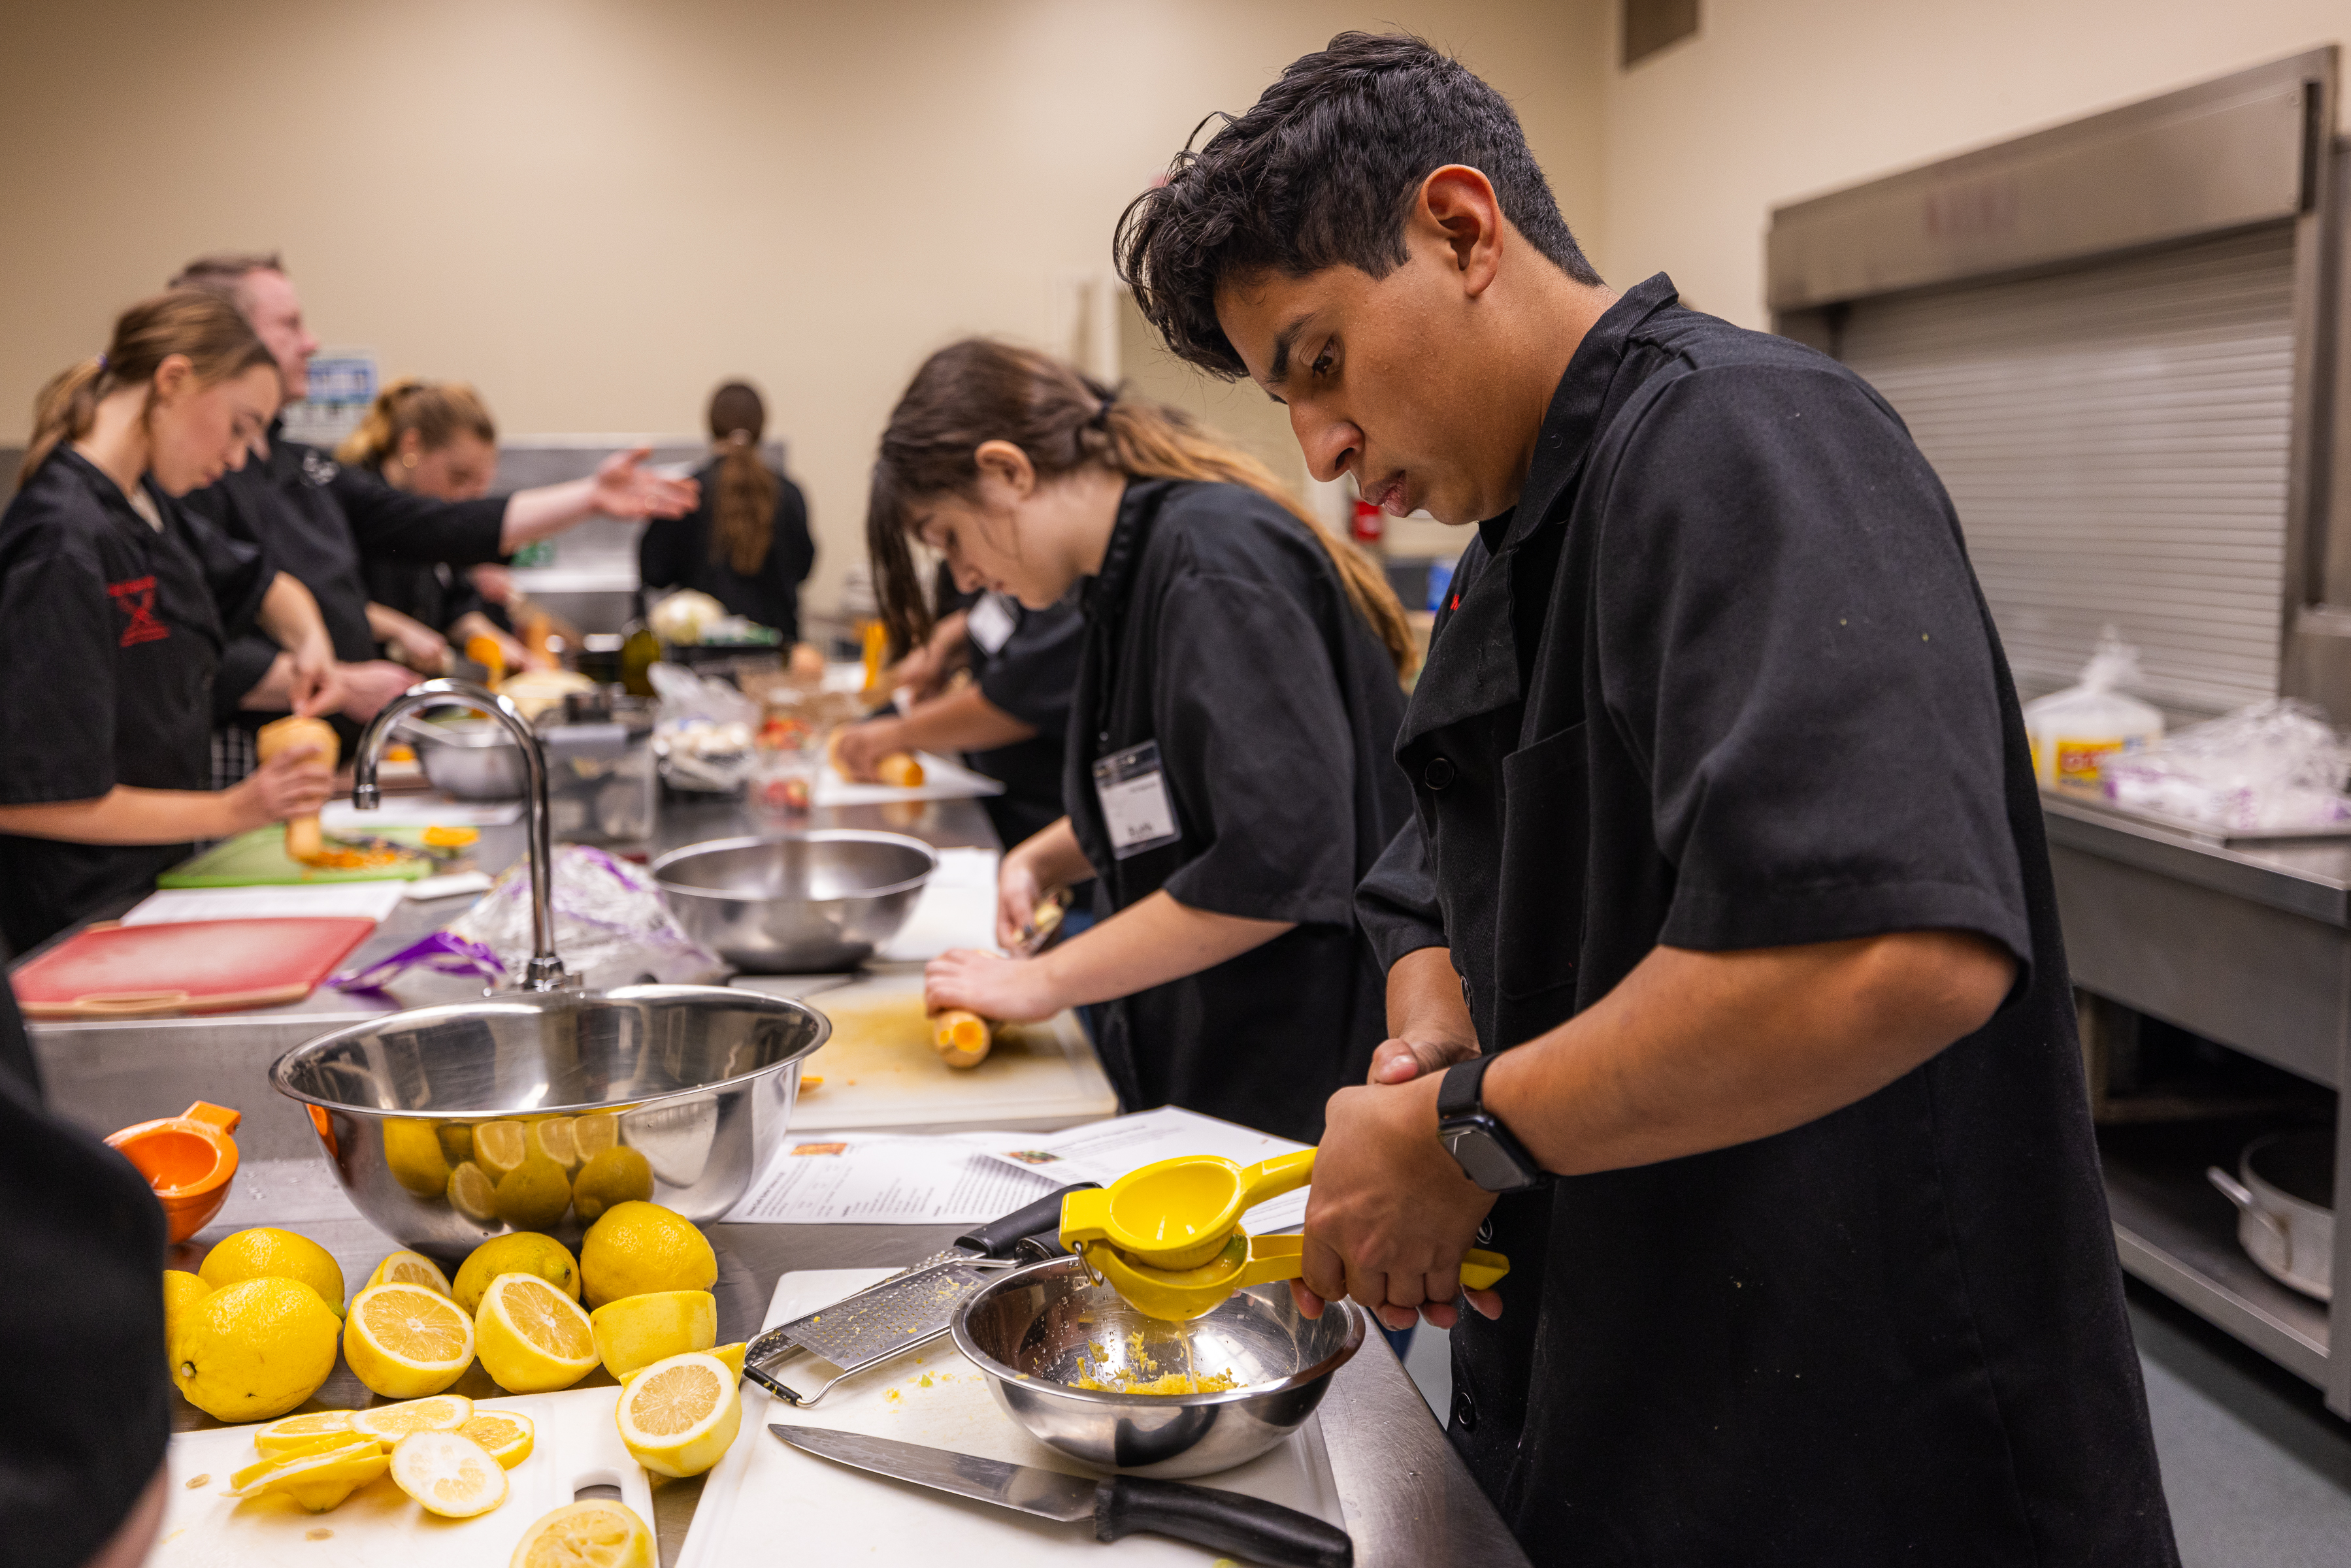 Chef Apprentices squeeze lemon juice and prepare squash